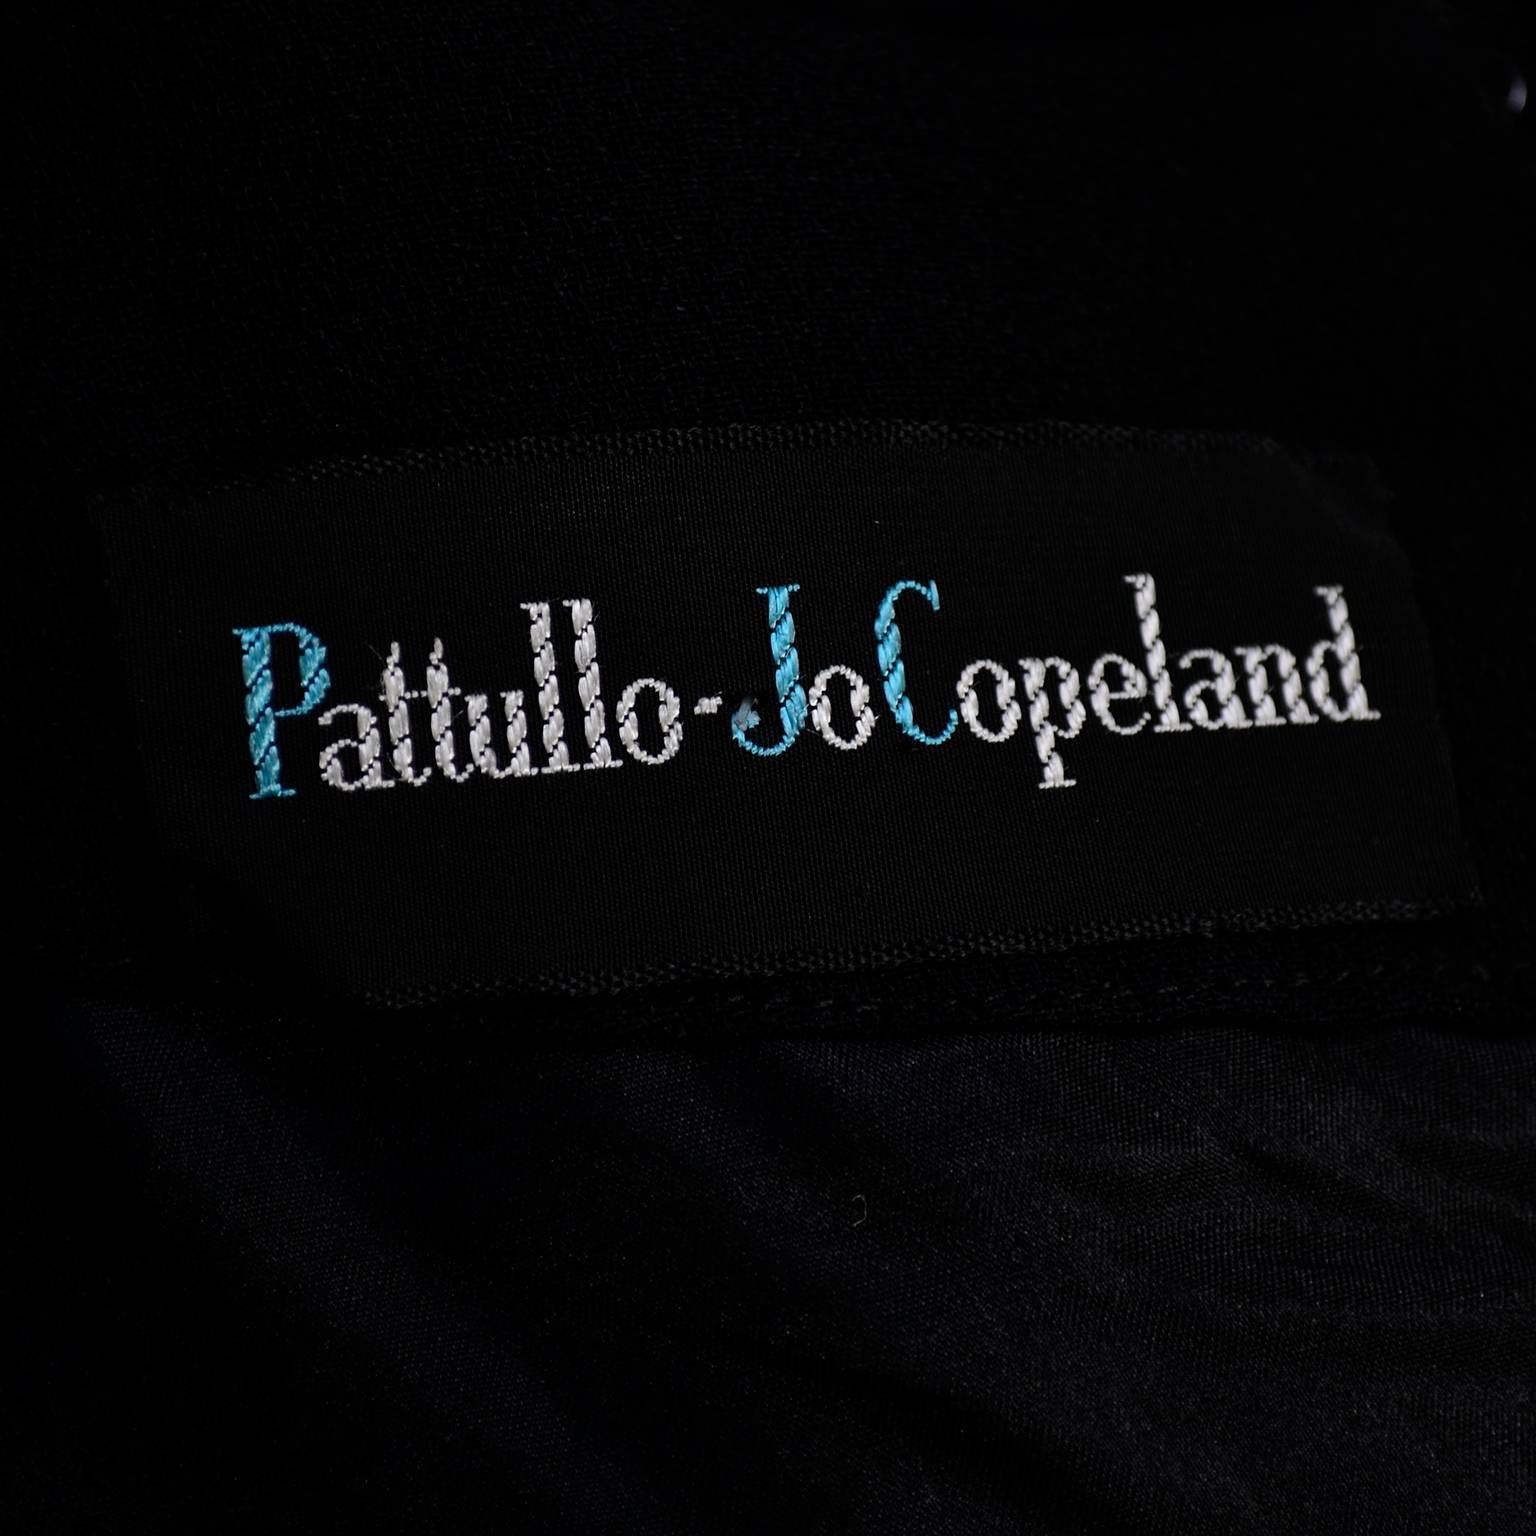 Pattullo-Jo Copeland Late 1960s Black Crepe Dress W Bow Belt and Taffeta Ruffles 3